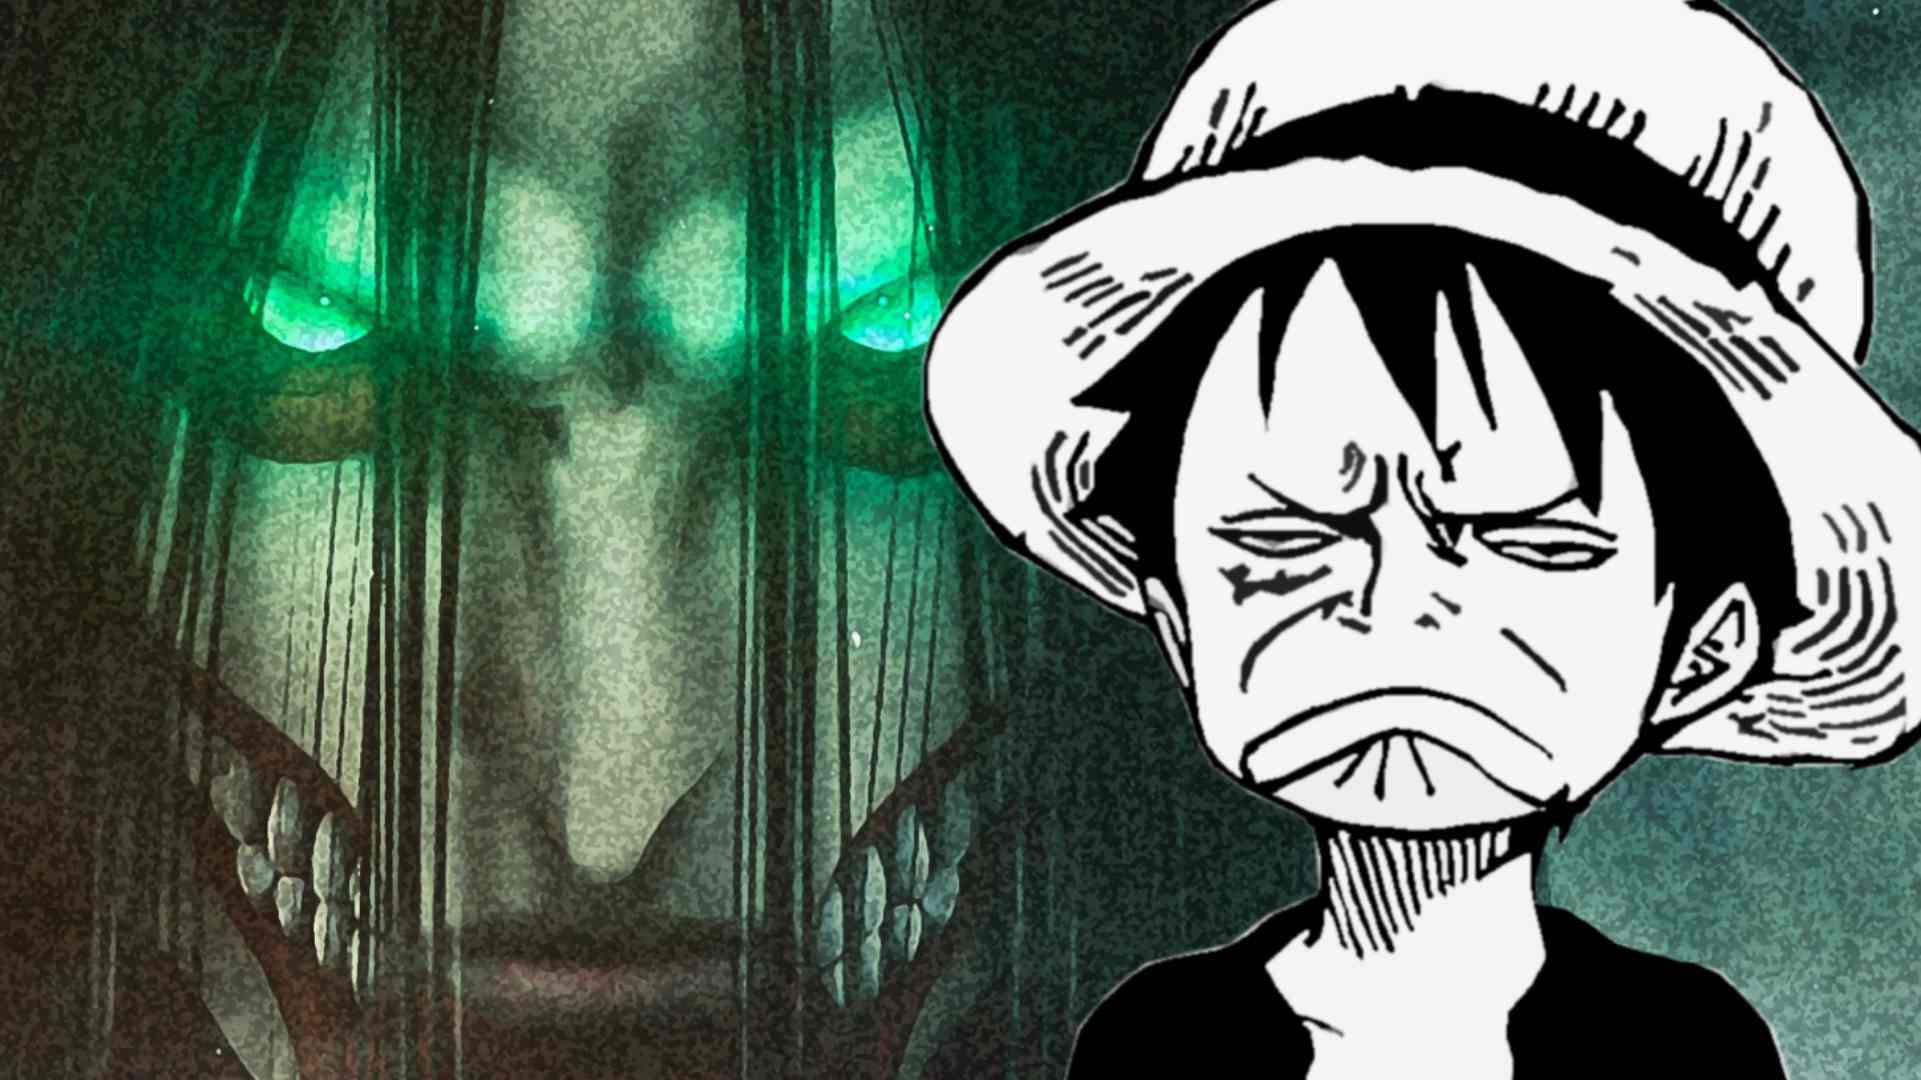 One Piece attack on titan dropped manga